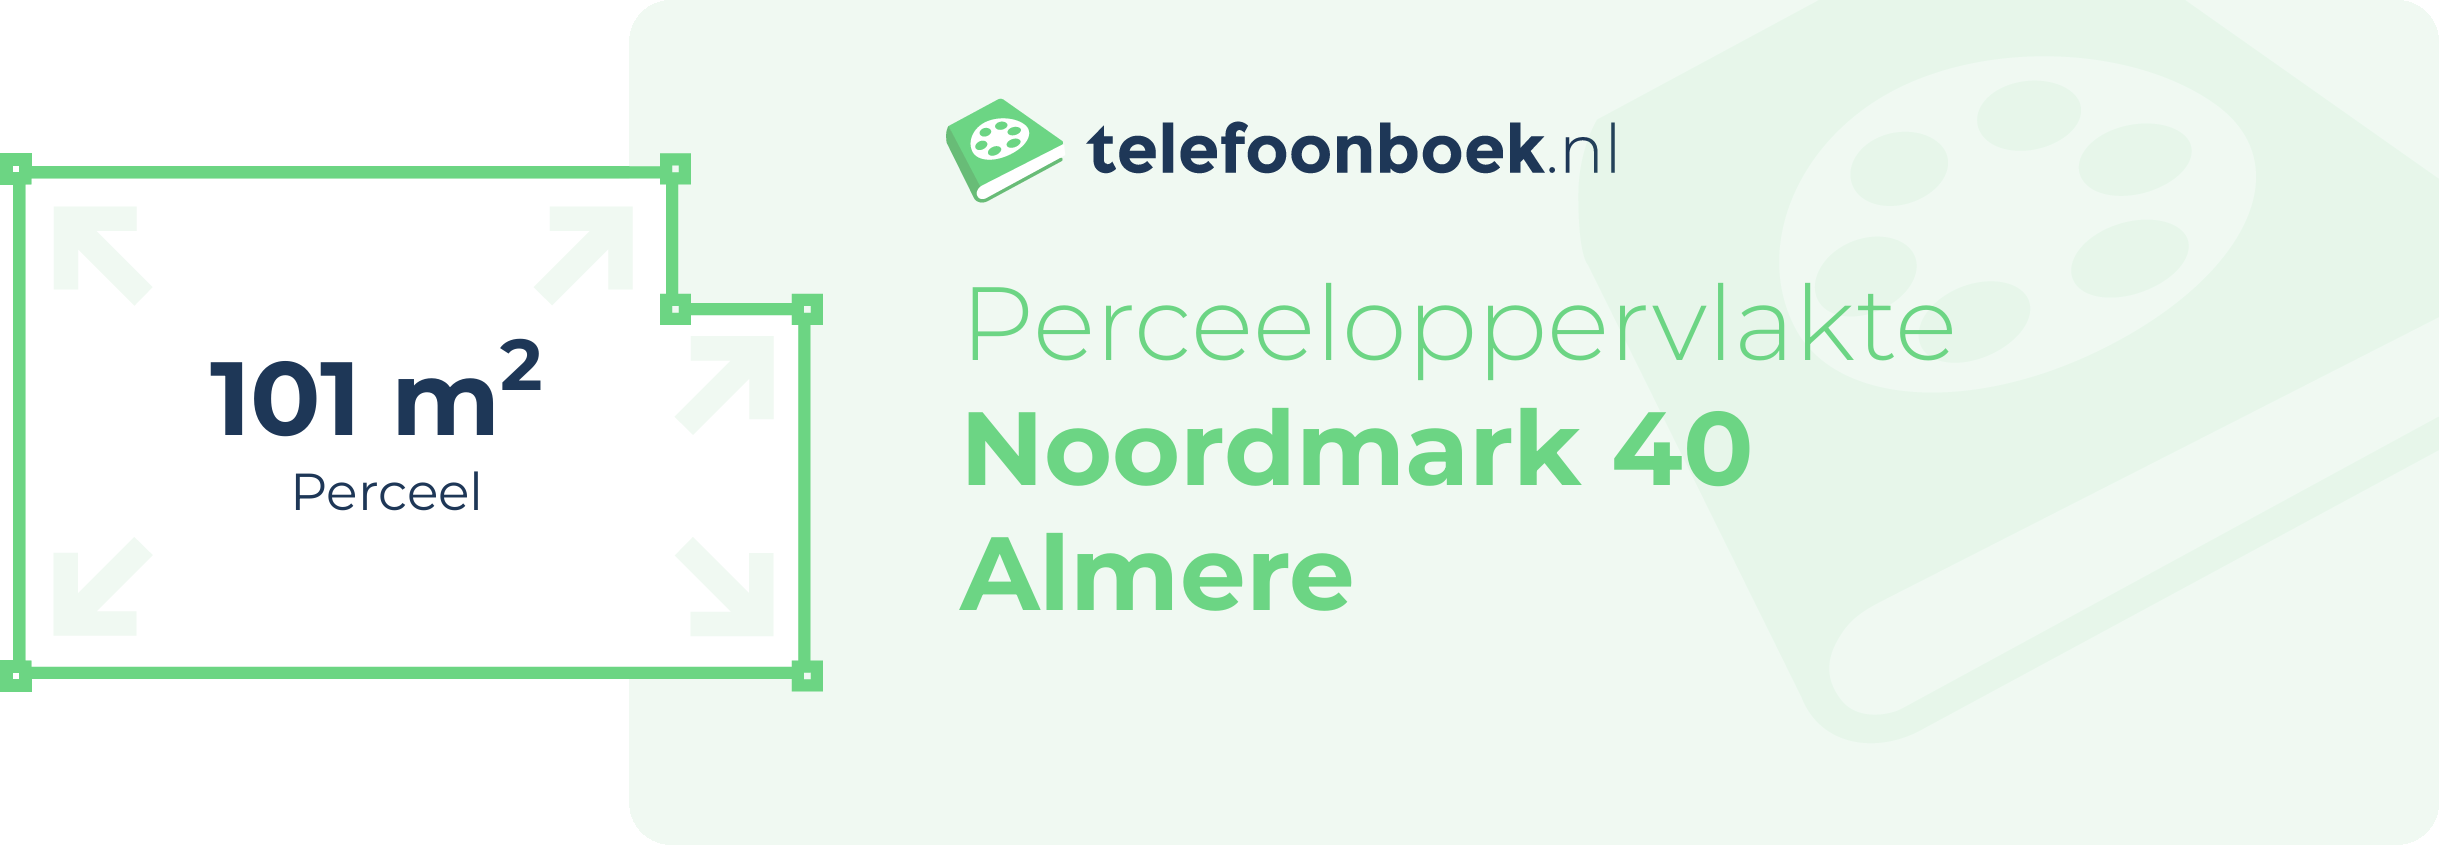 Perceeloppervlakte Noordmark 40 Almere